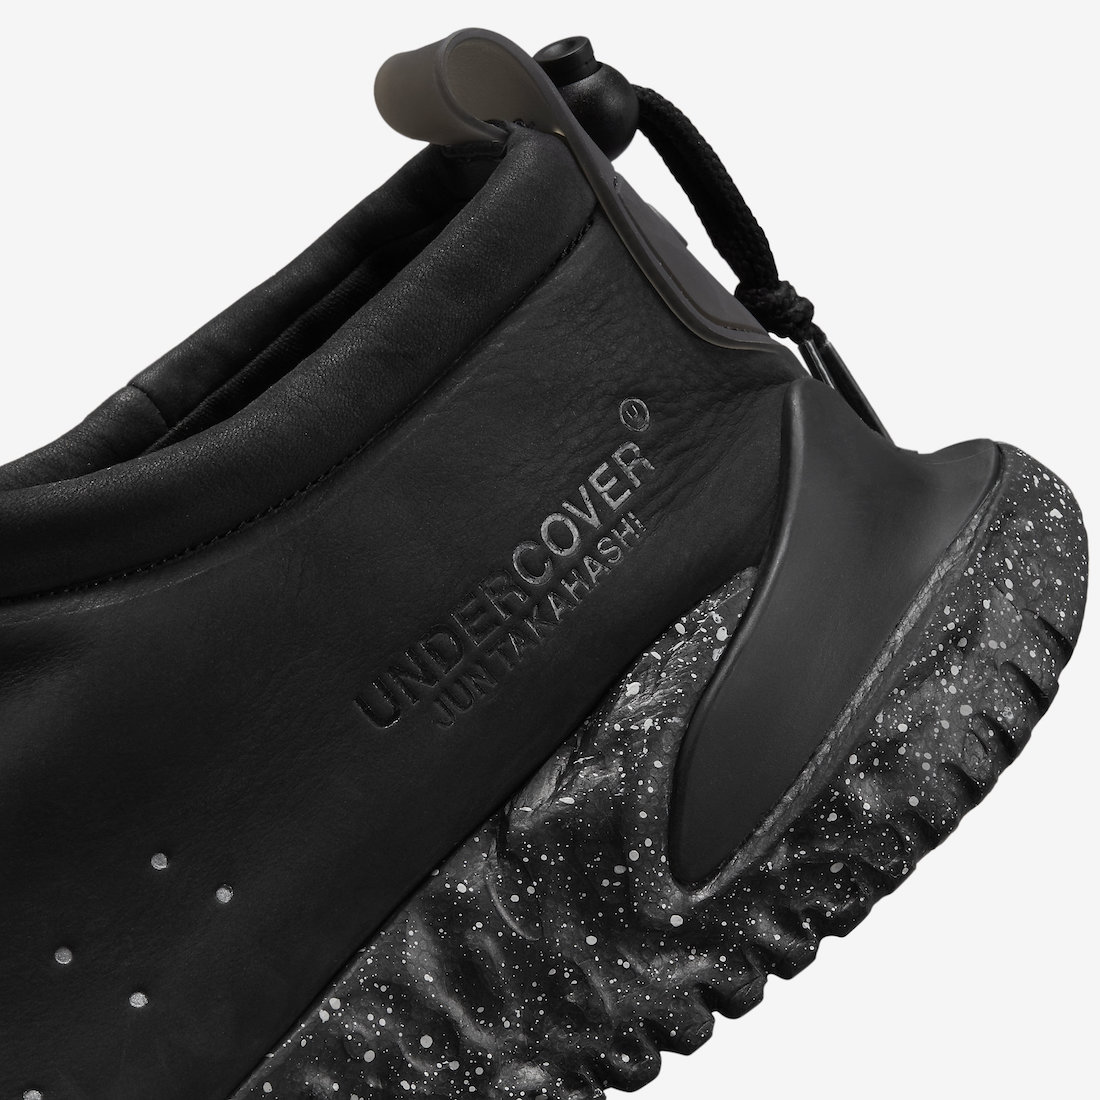 UNDERCOVER Nike Moc Flow Black DV5593-002 Release Date